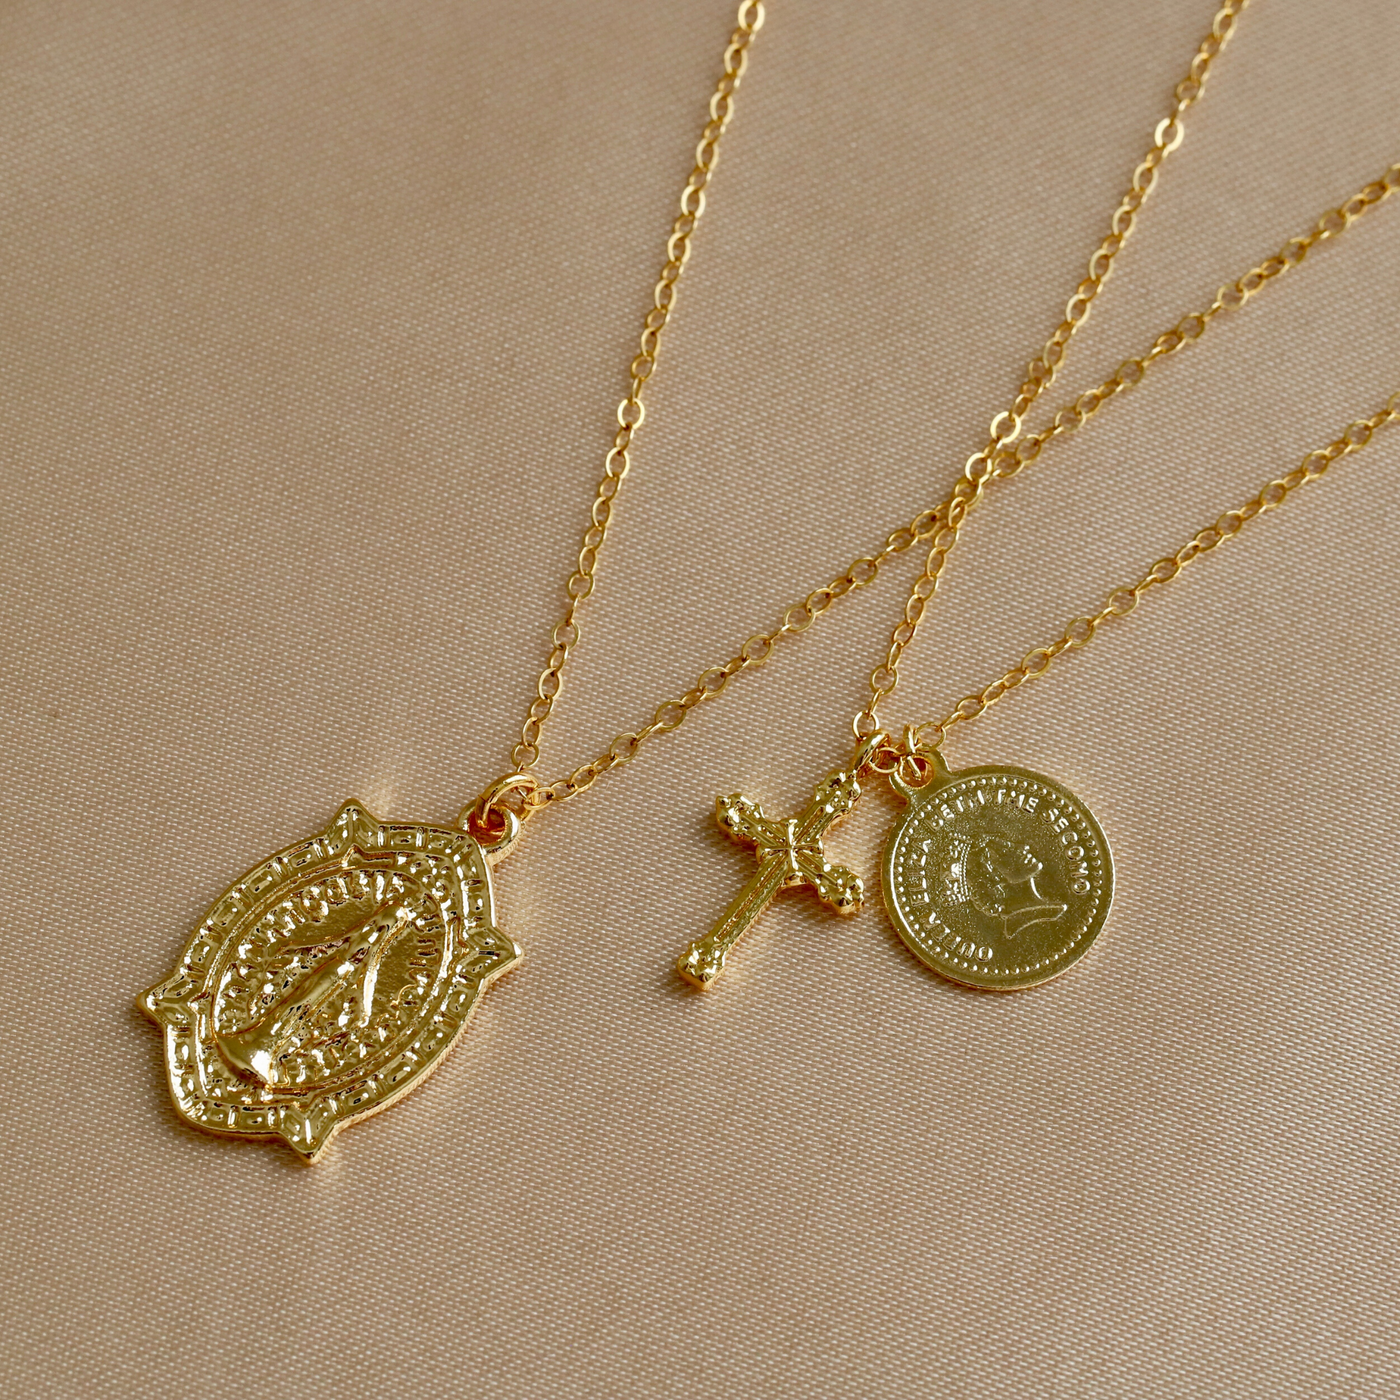 Gold religious necklaces 